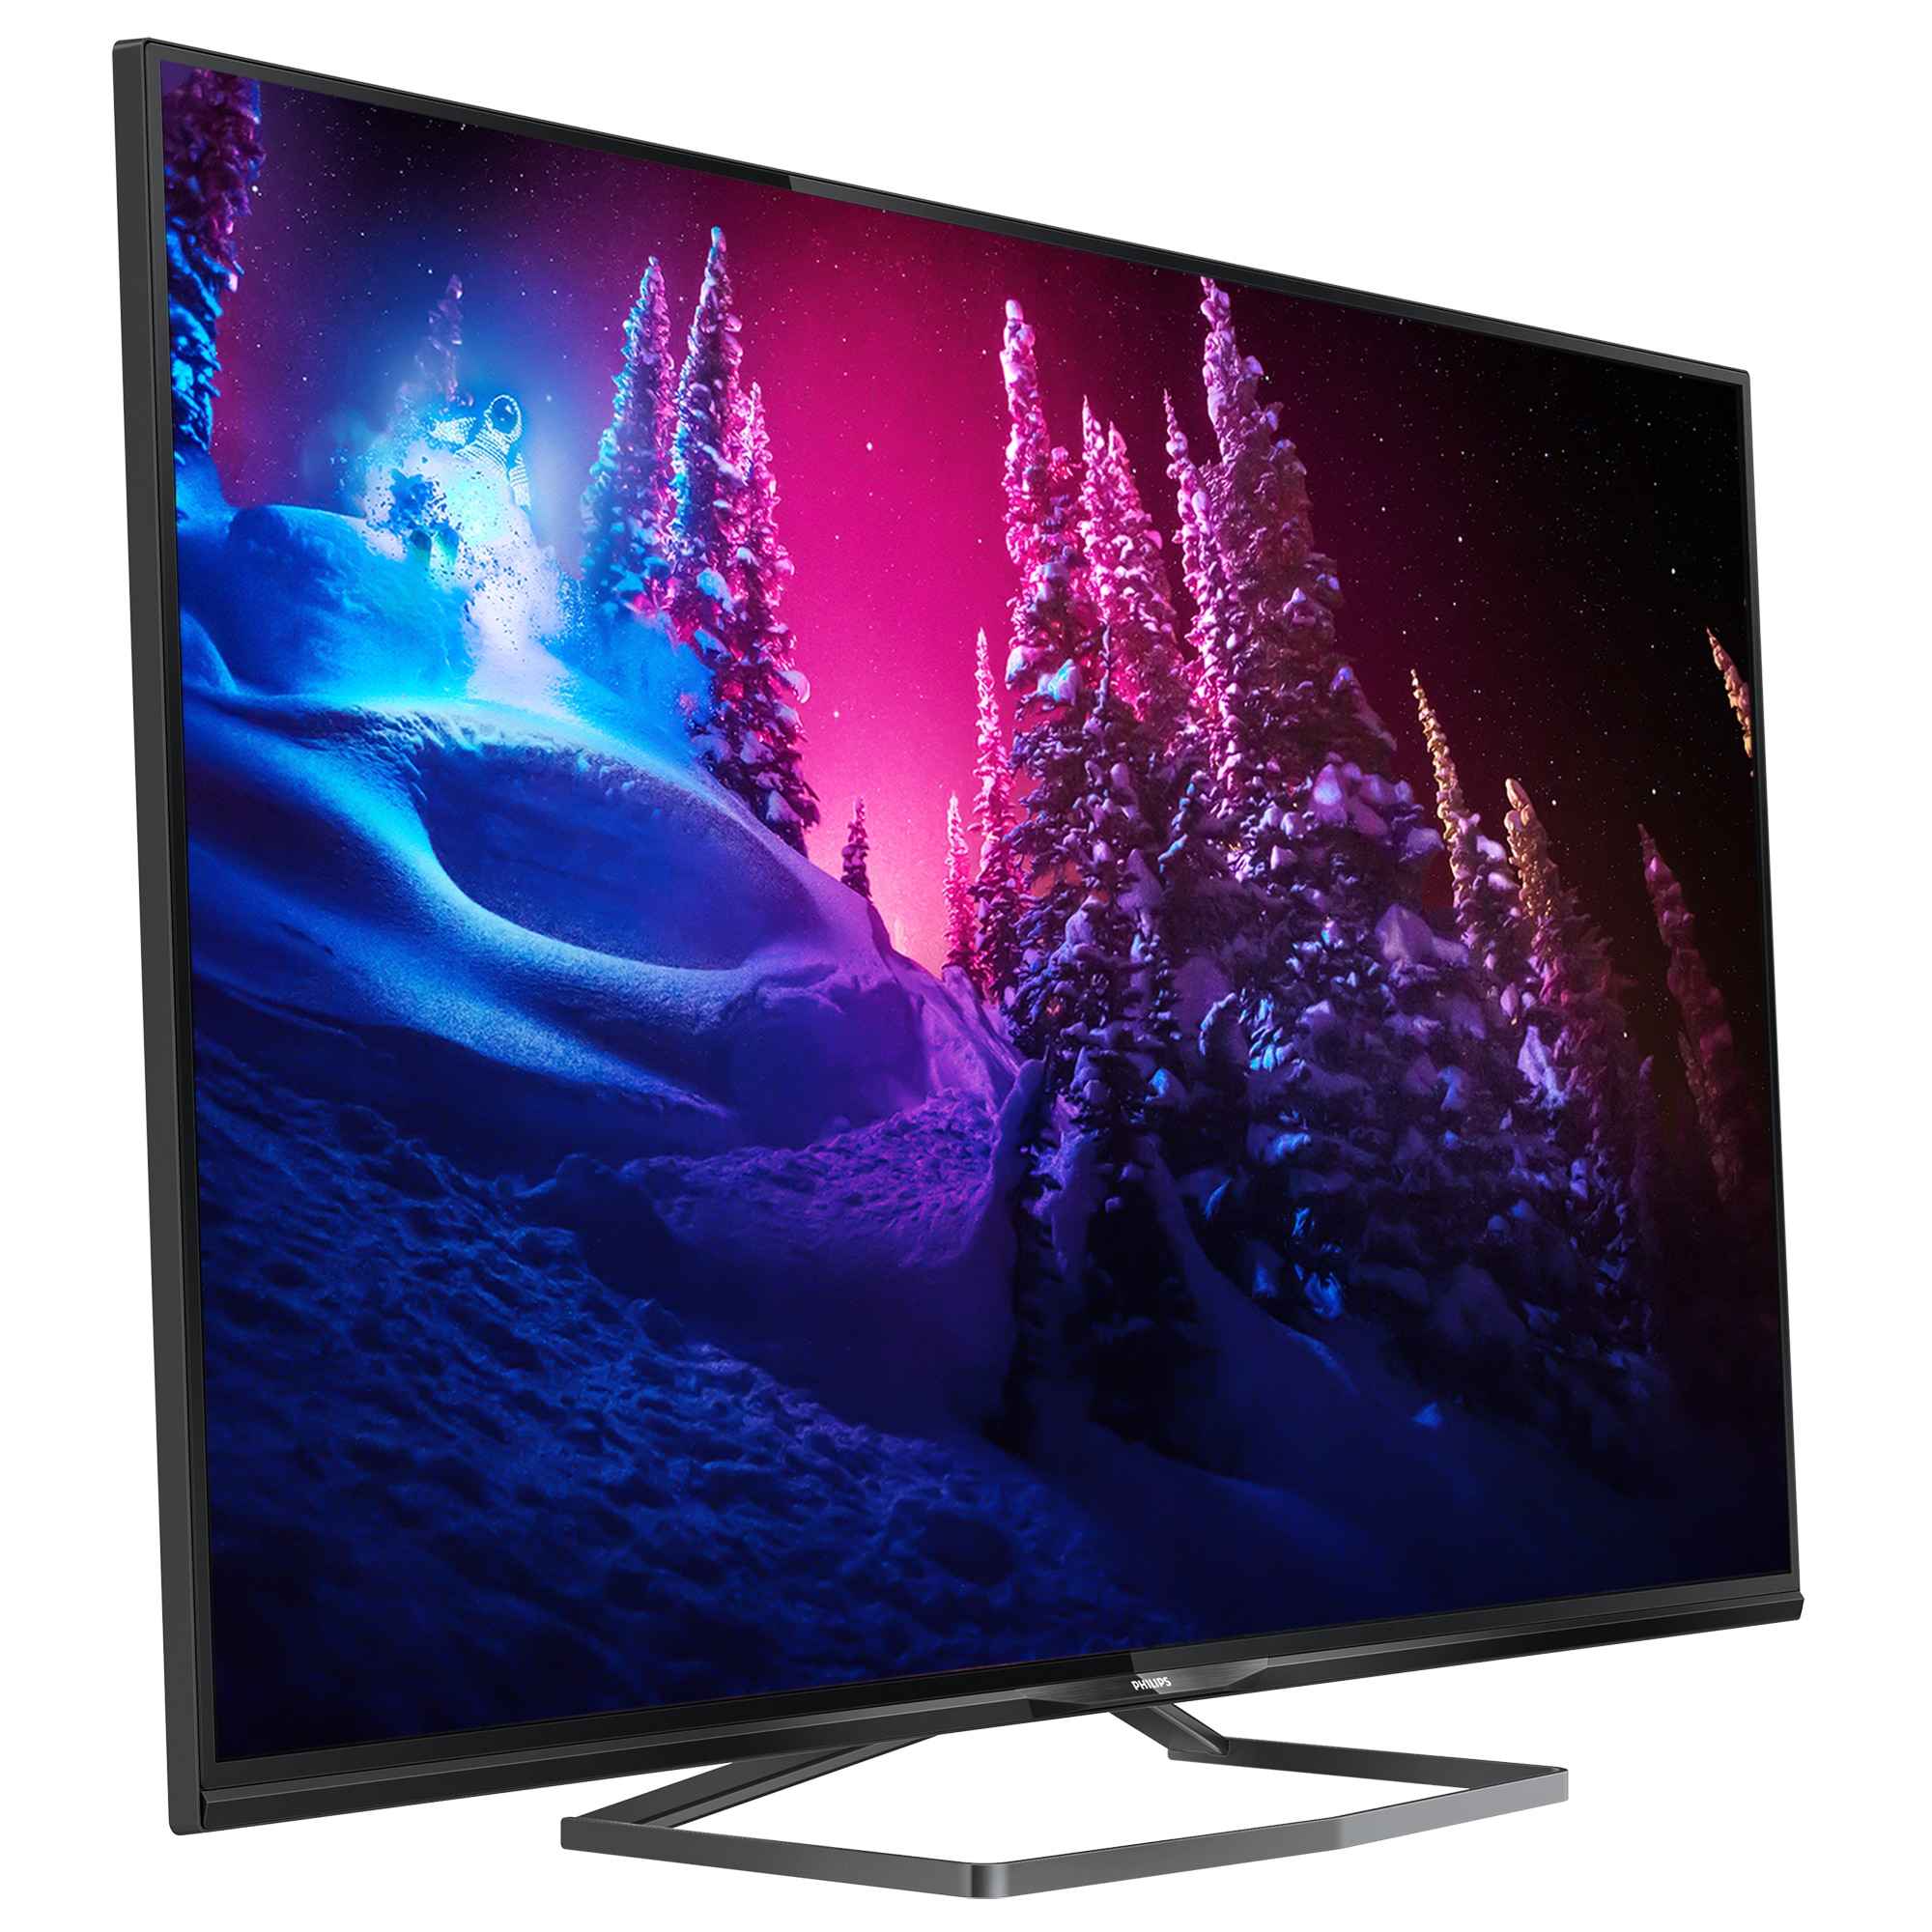 ring Jurassic Park Belly Televizor LED Smart TV 3D Philips, 102 cm, 40PUS6809, 4K Ultra HD, Clasa A+  - eMAG.ro